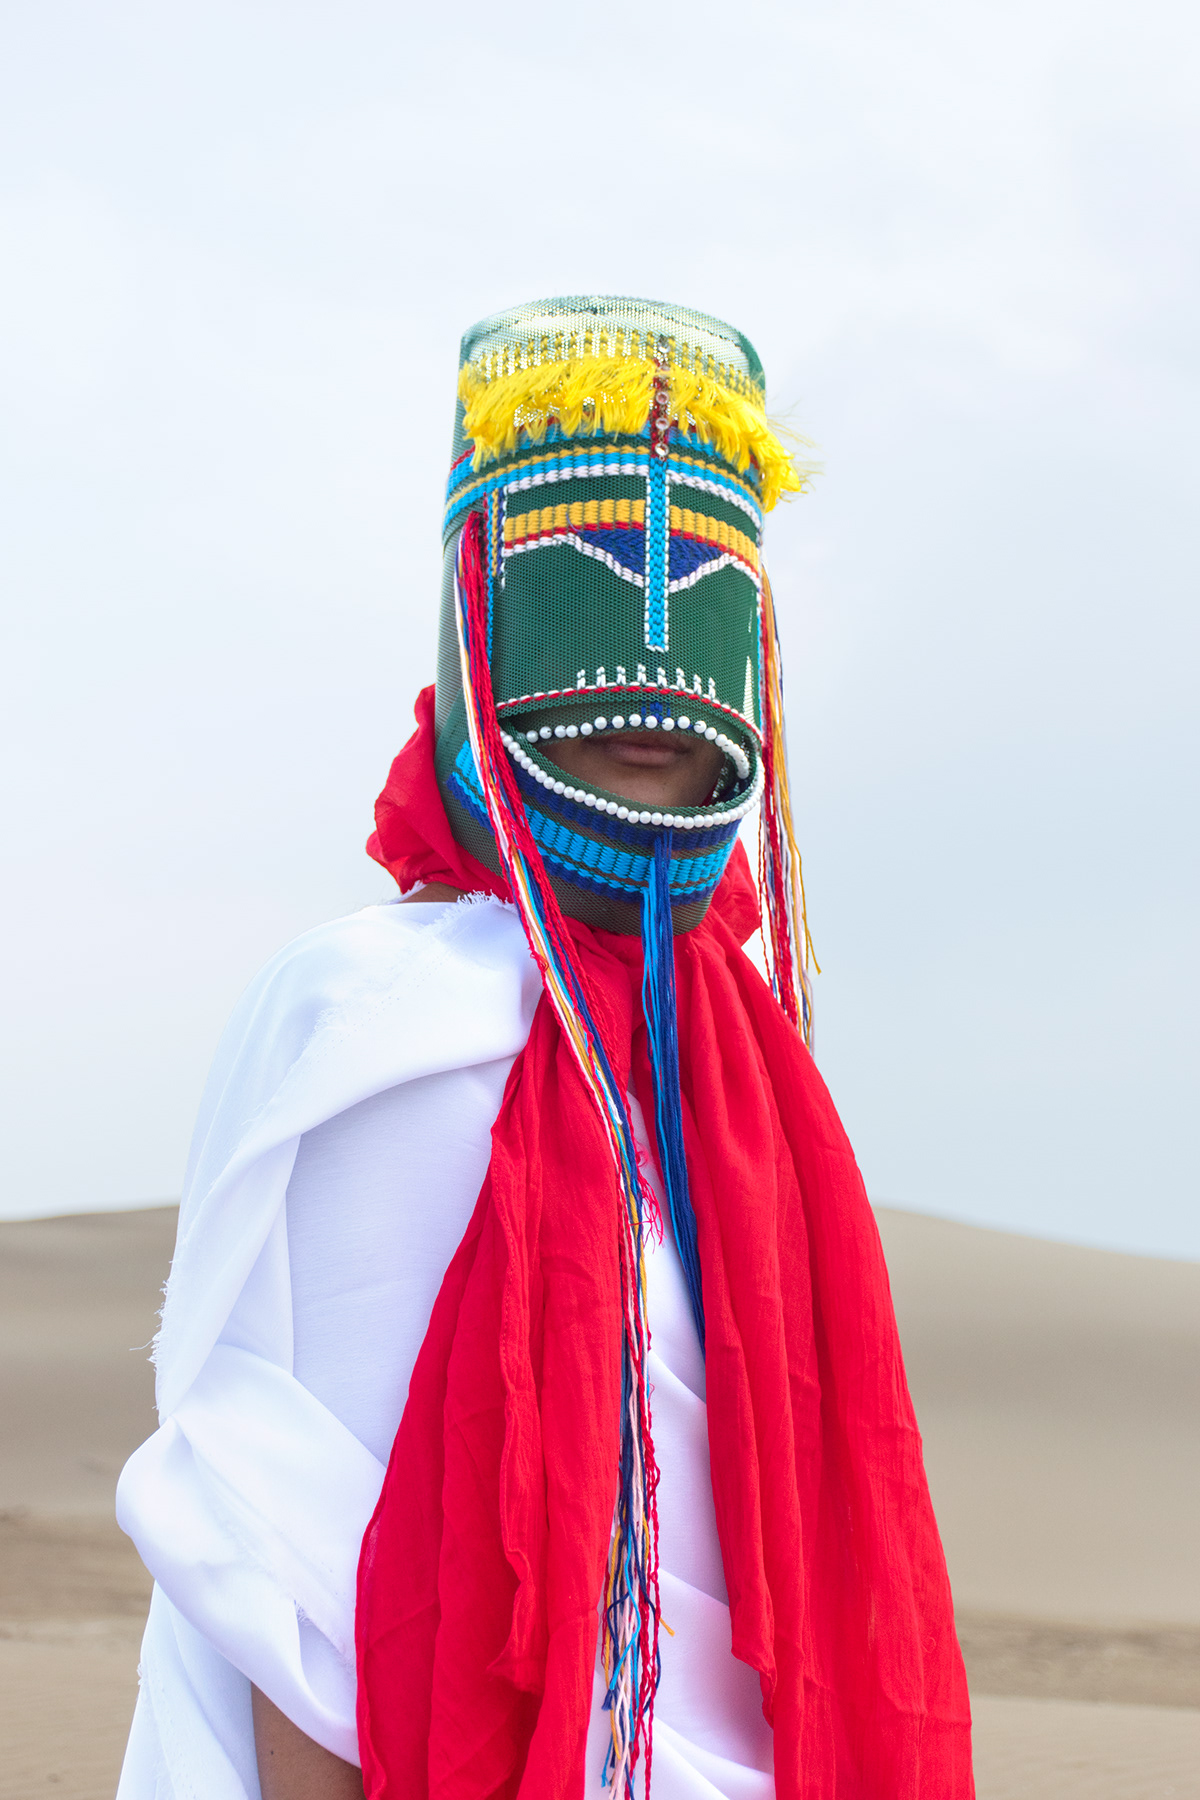 hindi zahra Indigo marruecos Fotografia AZUL mascaras mask amazigh multicultural diseño gráfico